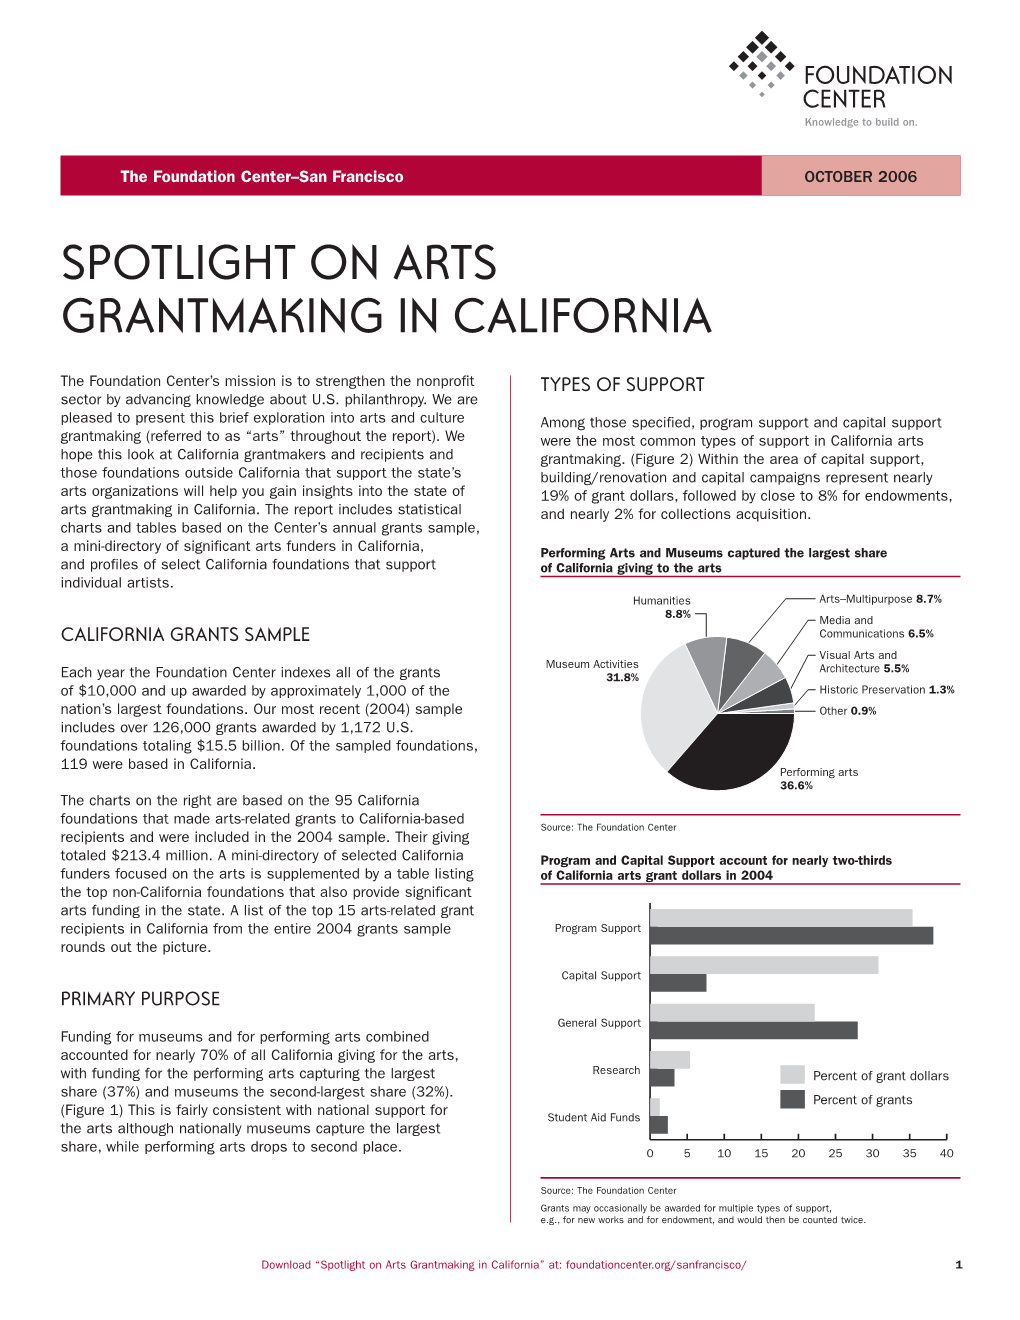 Spotlight on Arts Grantmaking in California